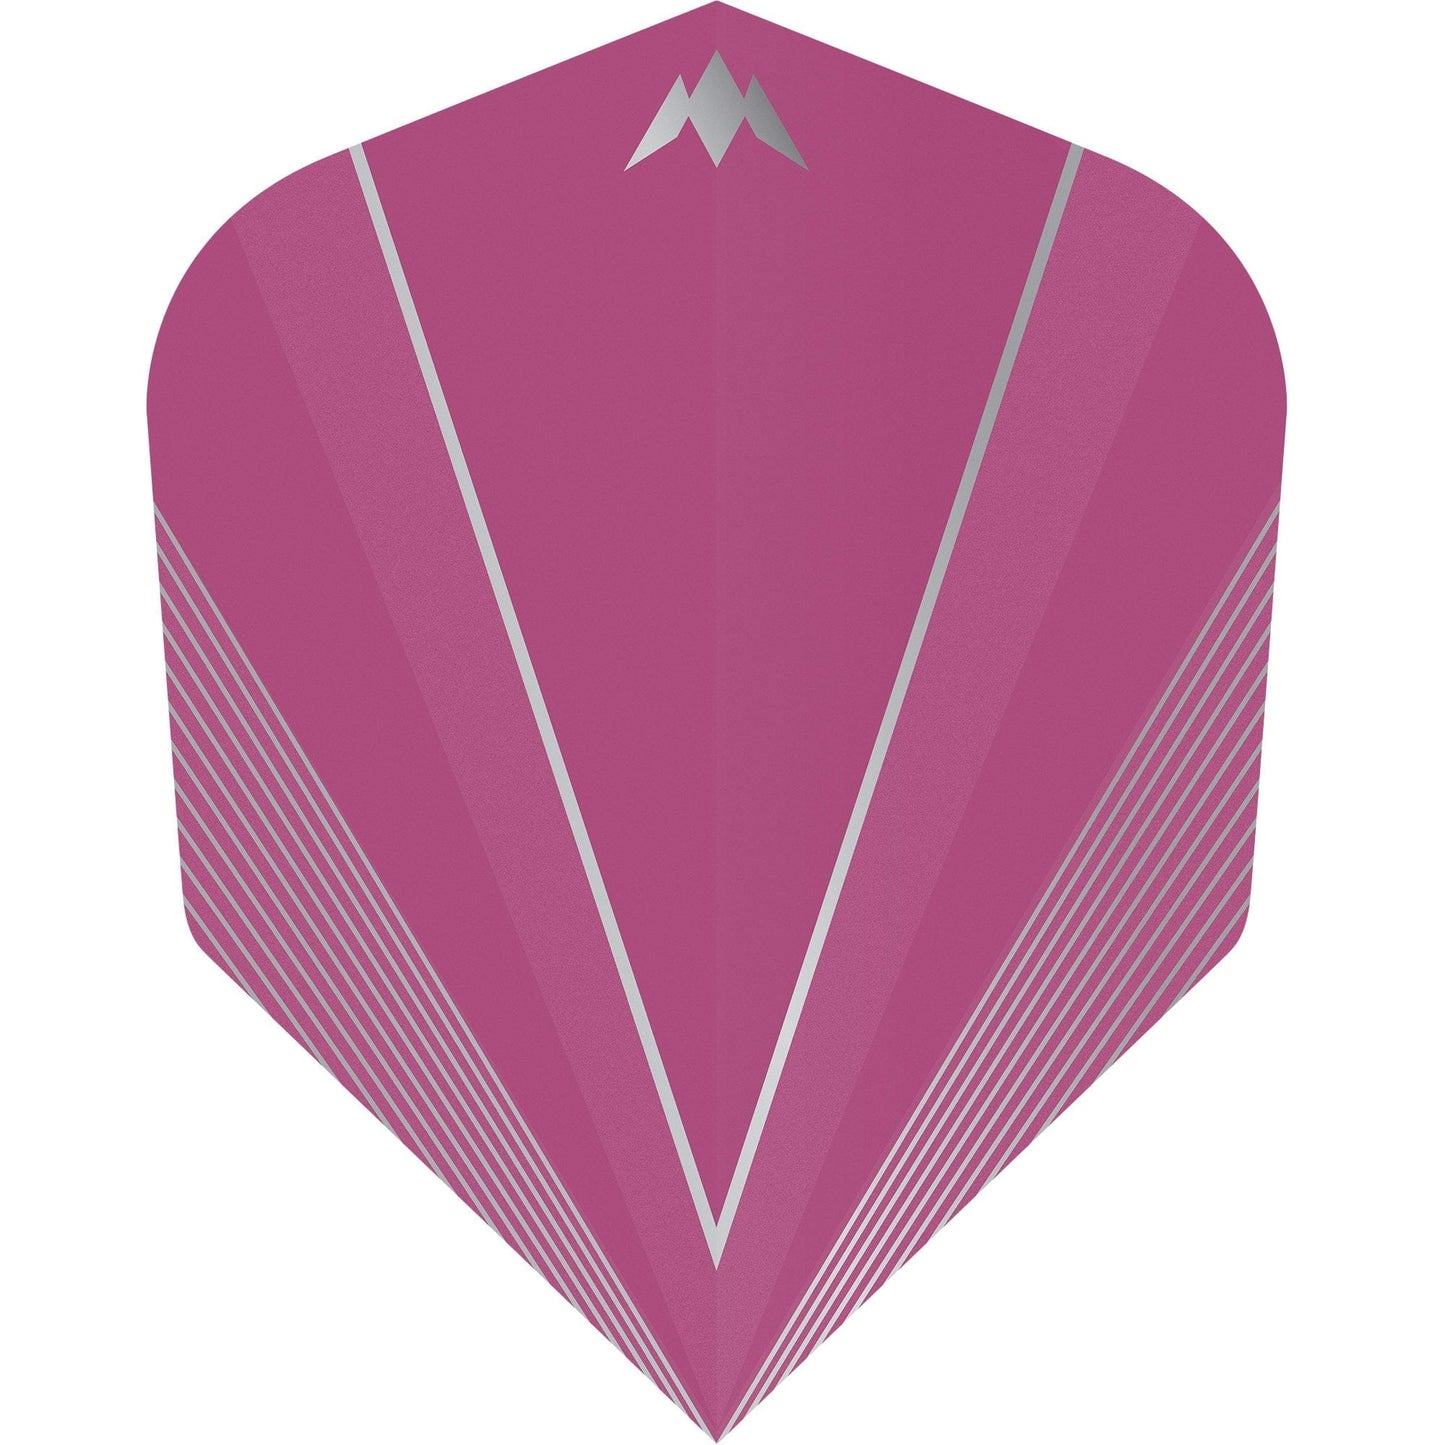 Mission Shades Dart Flights - 100 Micron - No6 - Std Pink